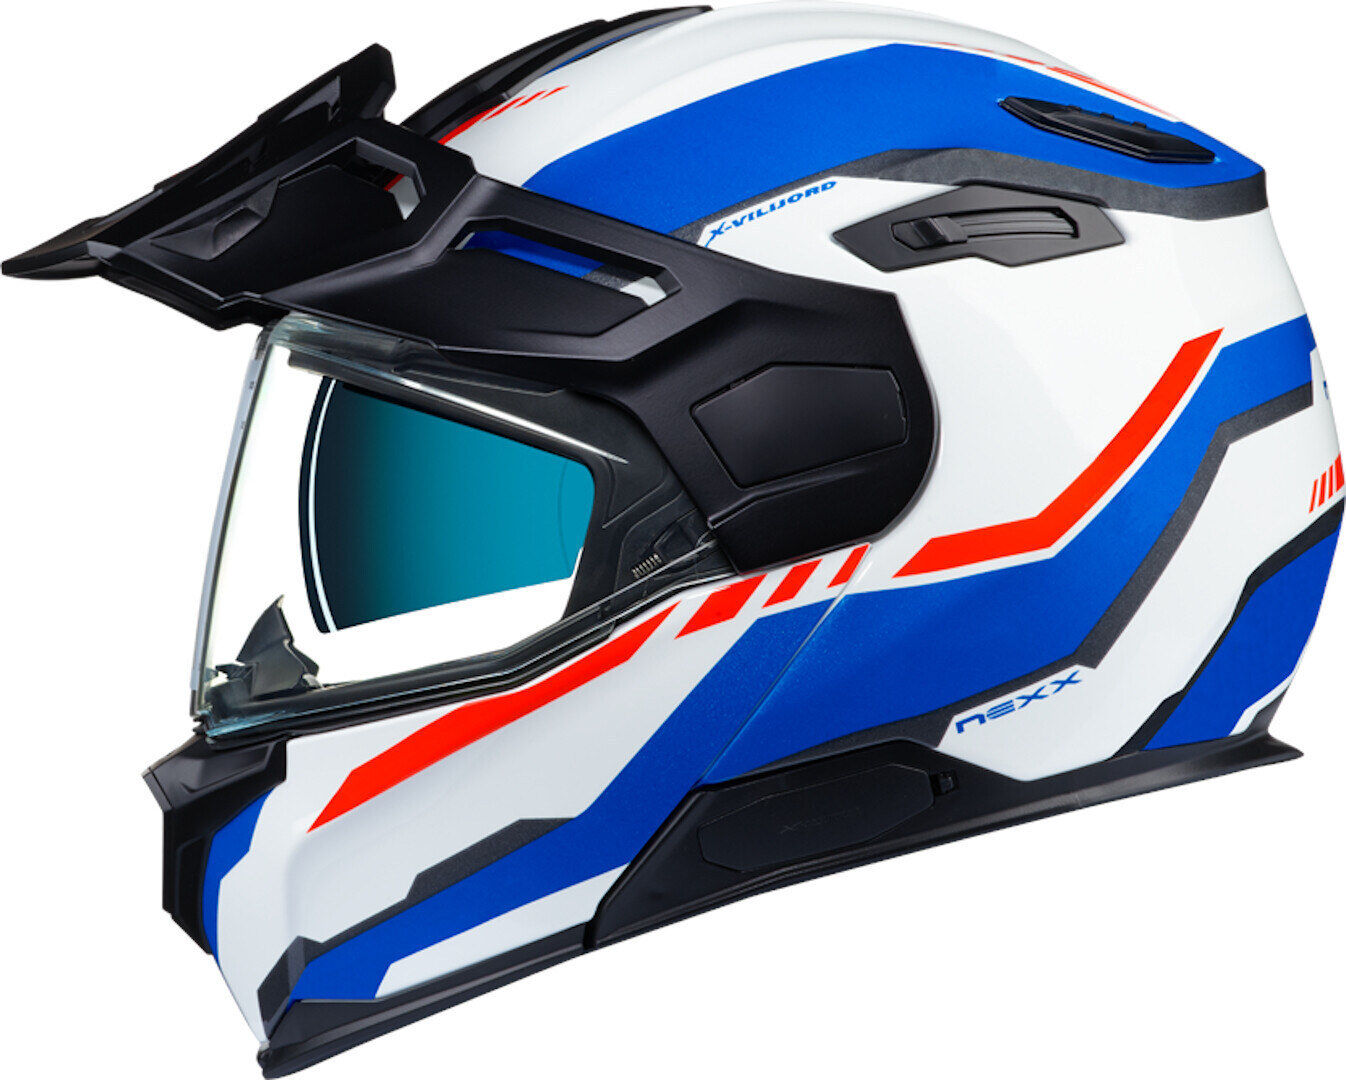 NEXX X.Vilijord Continental casco - Blanco Rojo Azul (L)